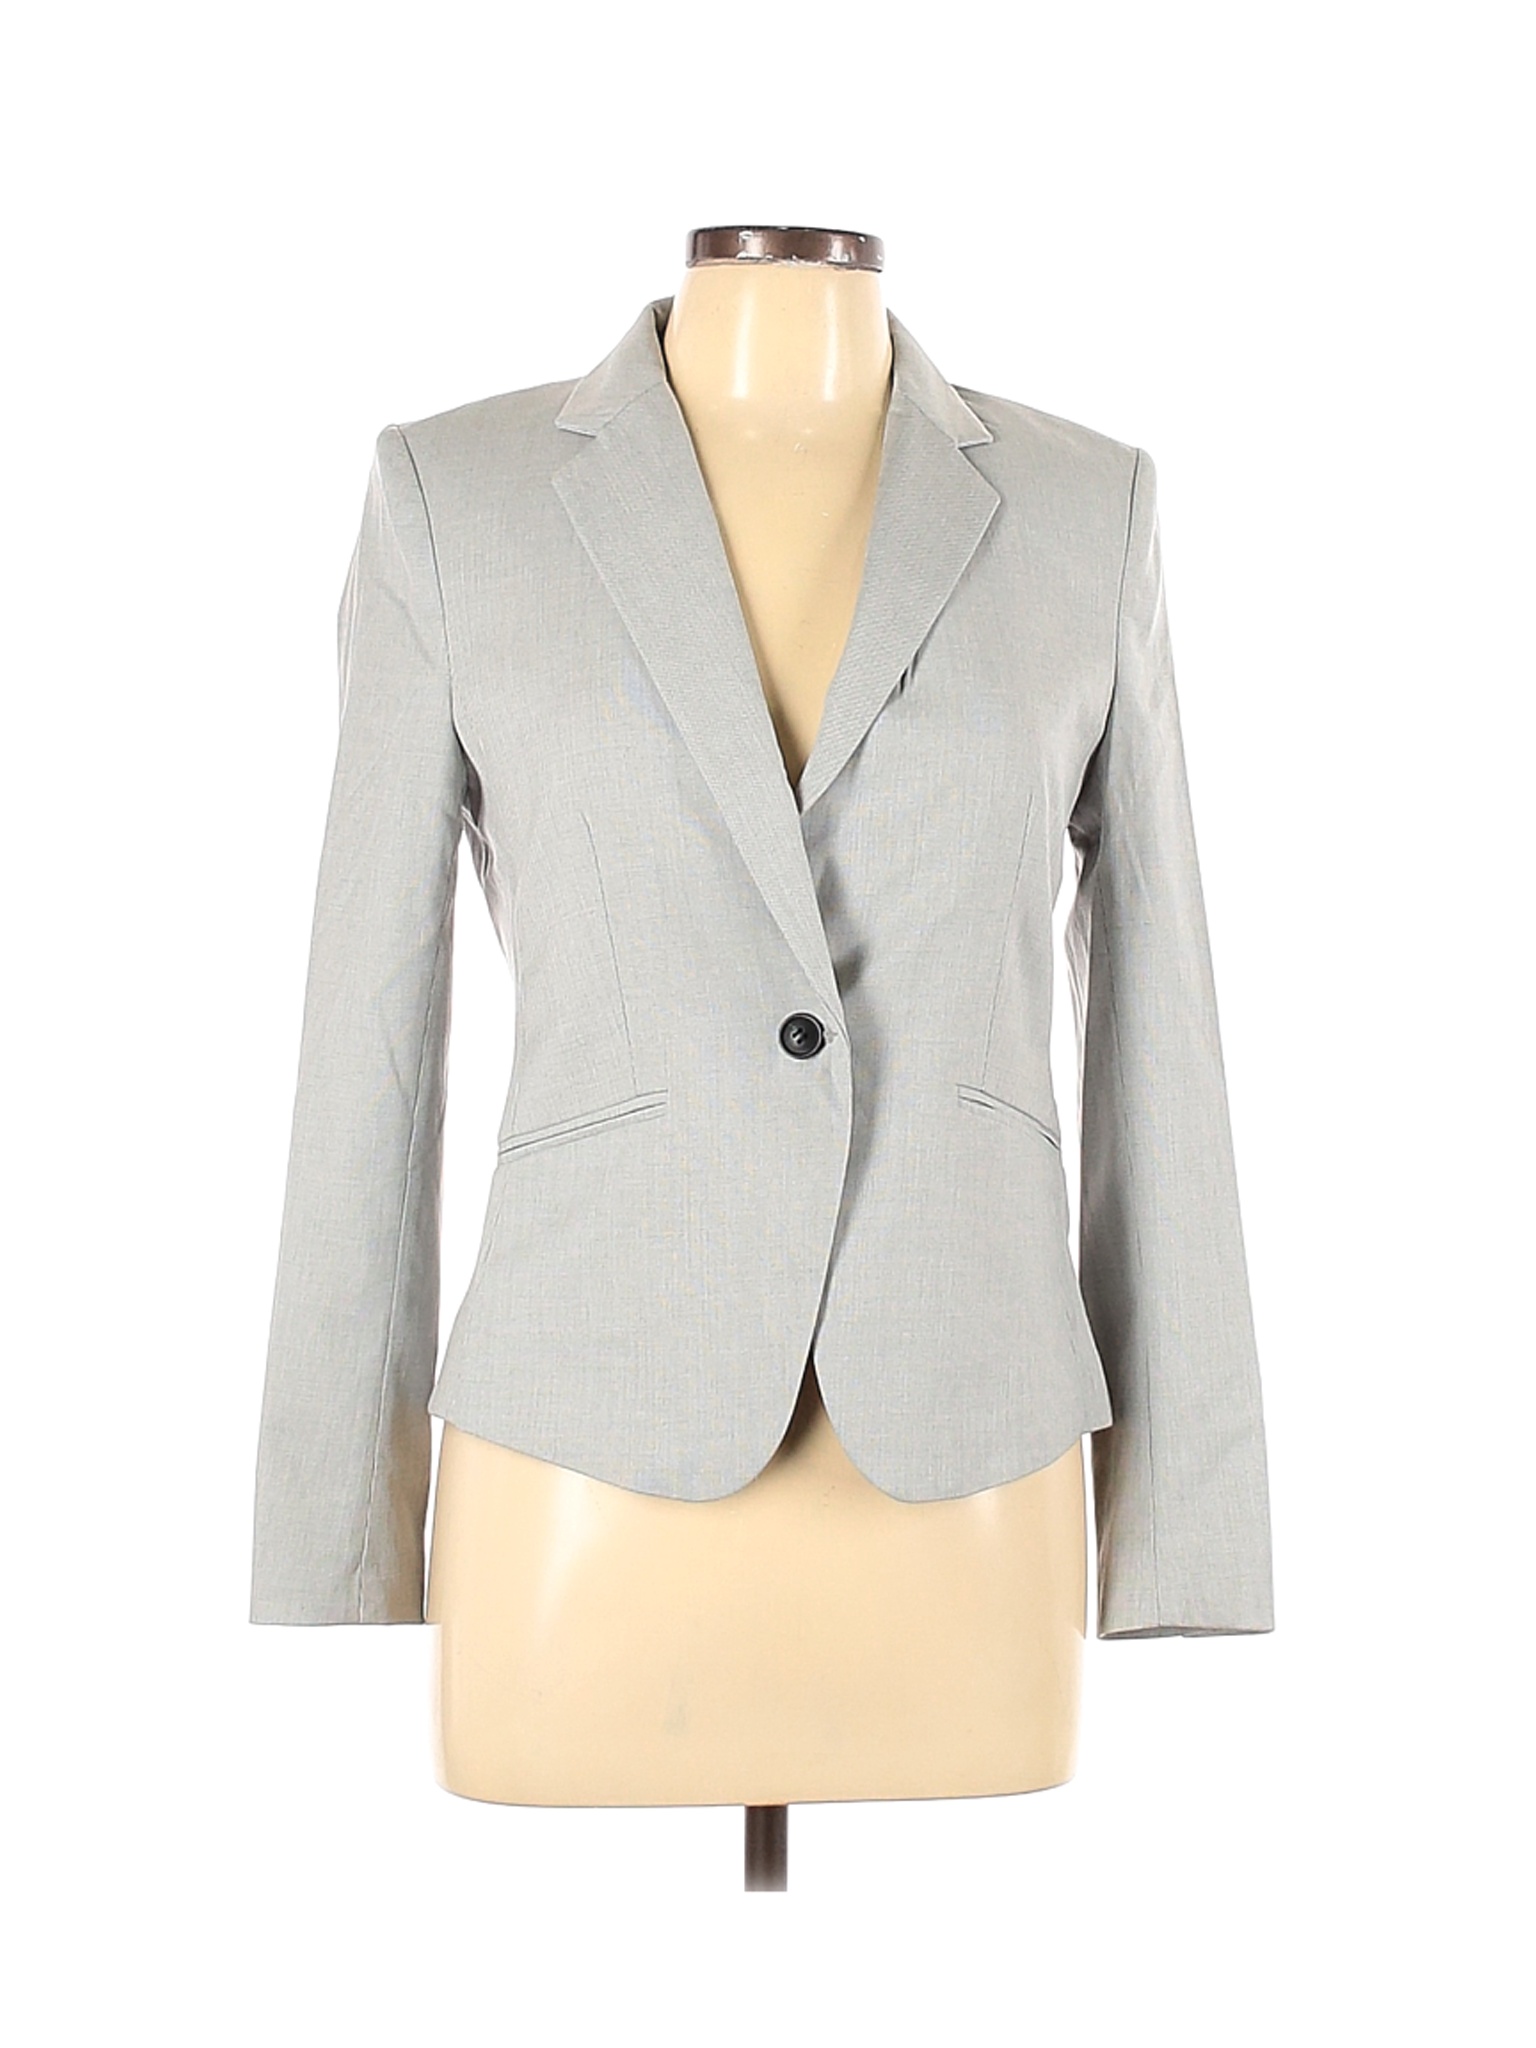 NWT H&M Women Gray Blazer 10 | eBay